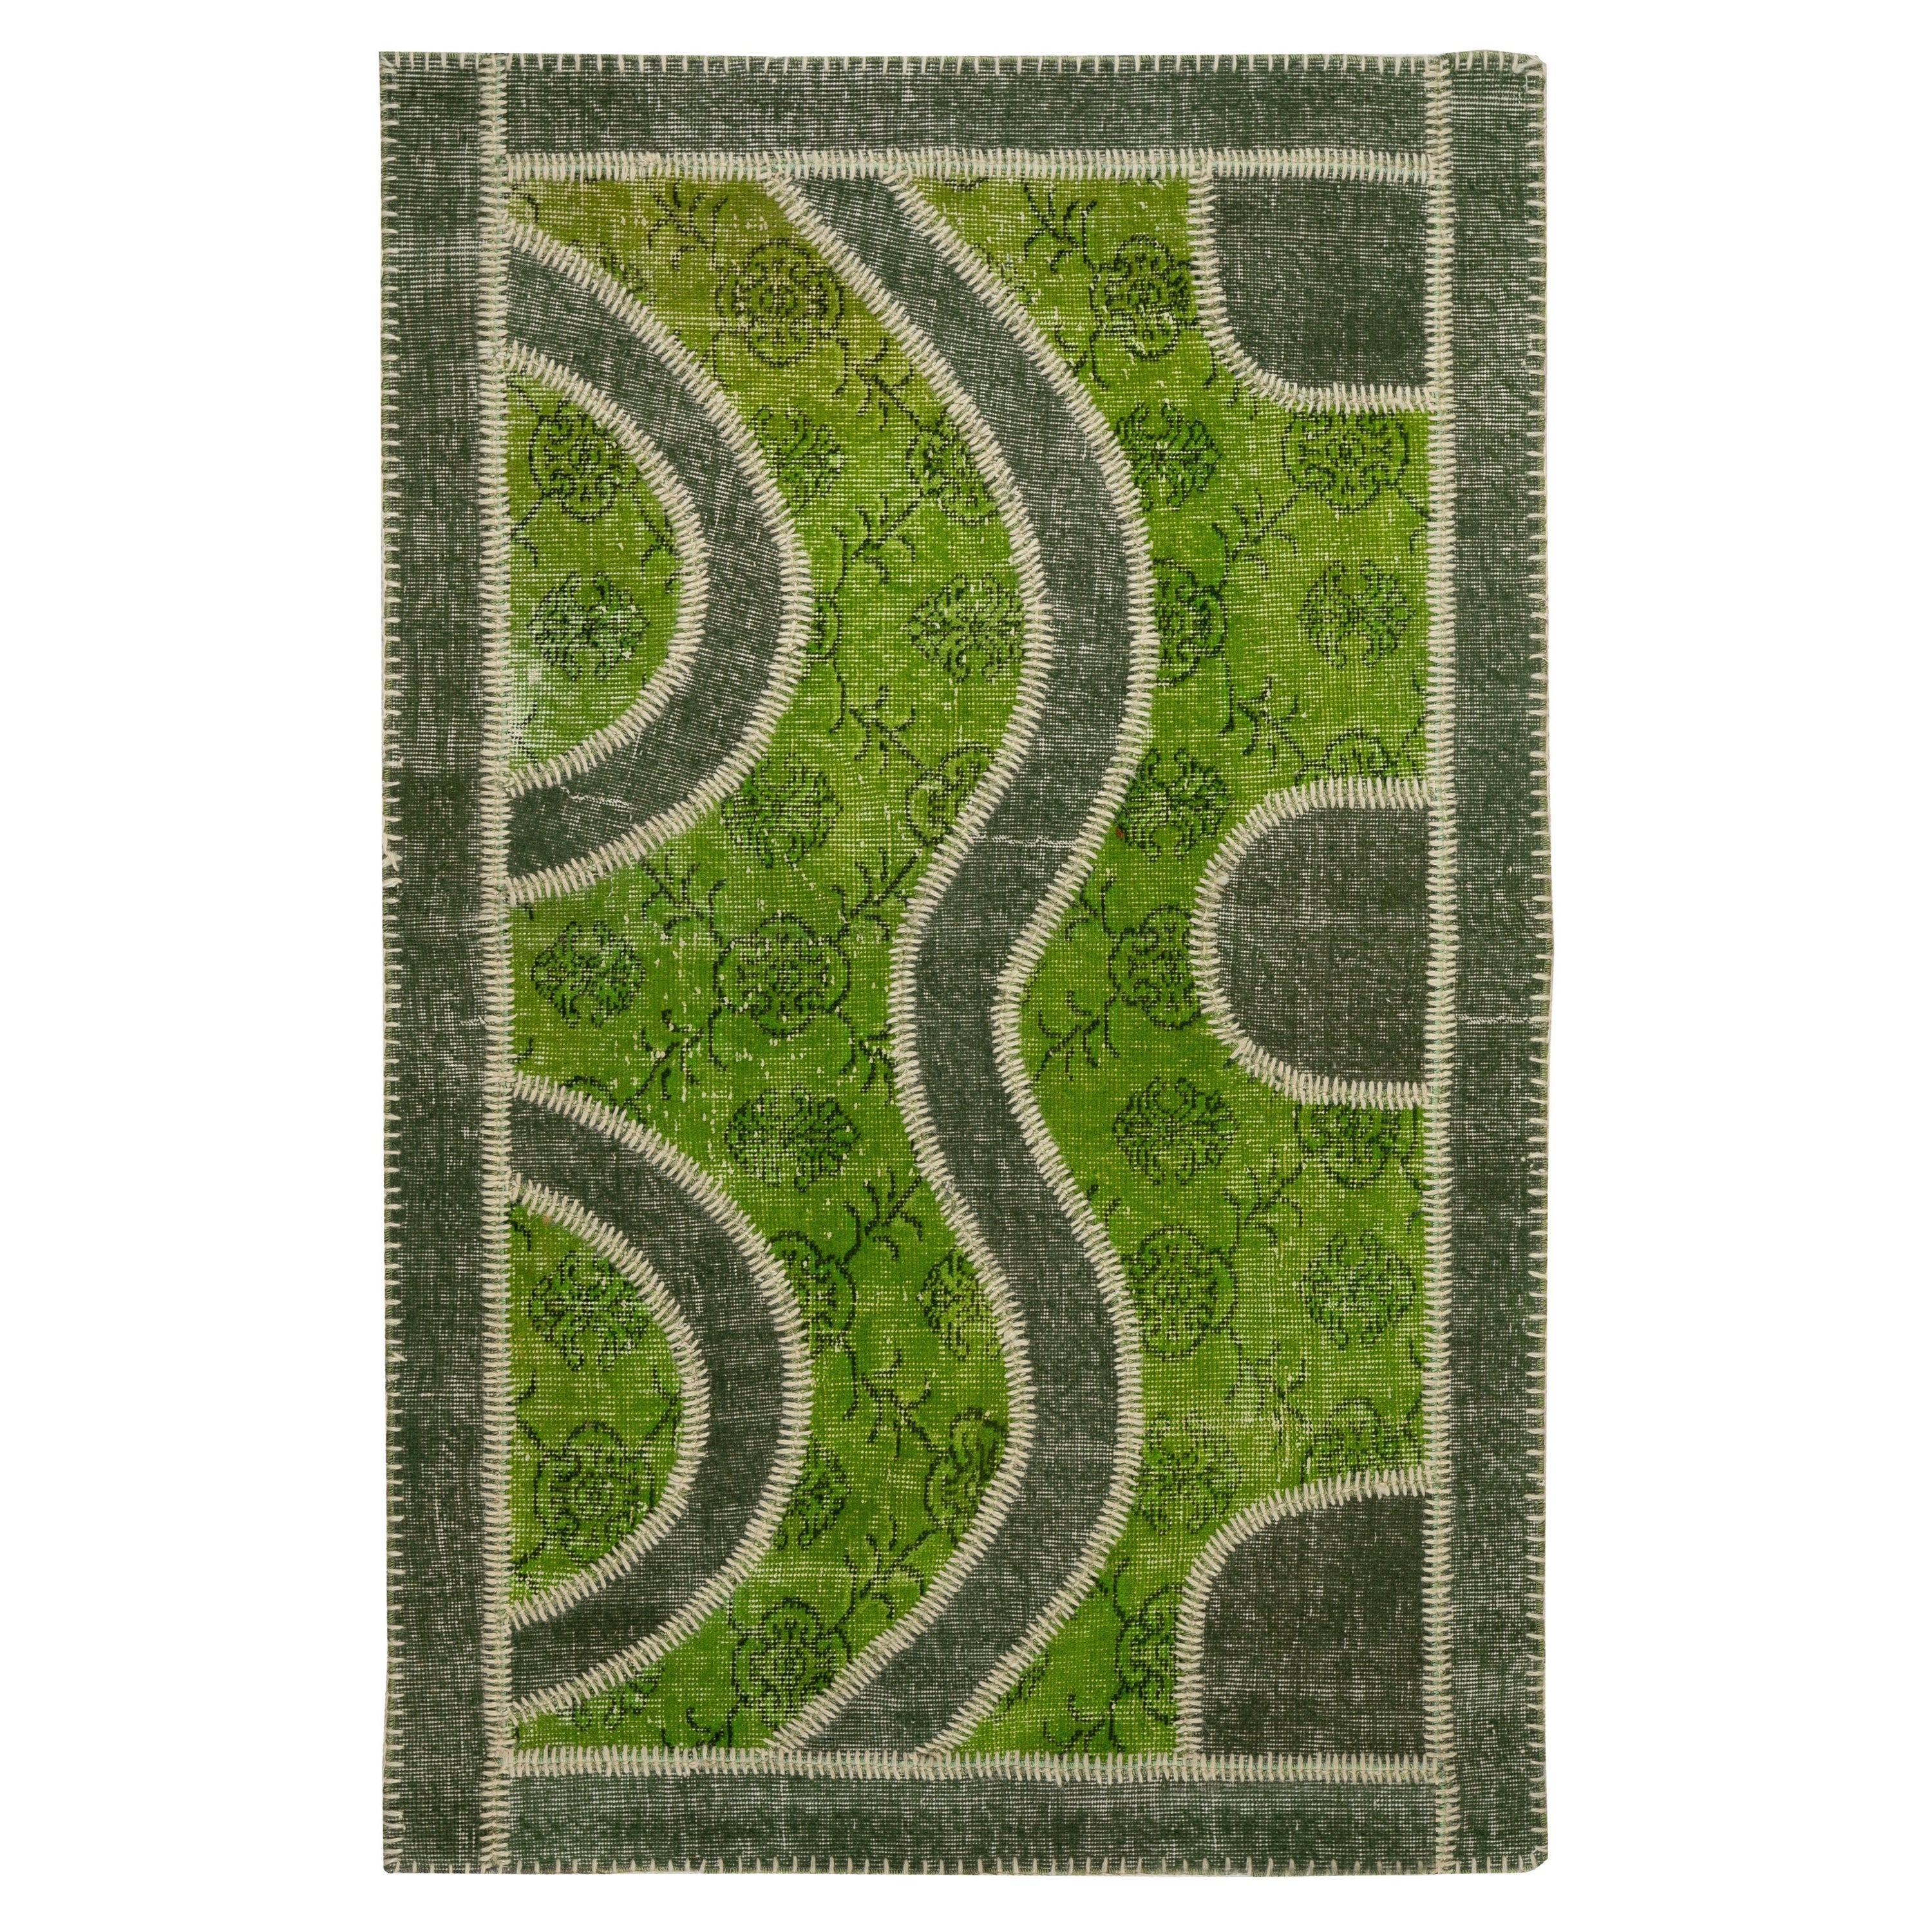 Handmade Patchwork Rug in Shades of Green. Living Room Decor Woolen Carpet